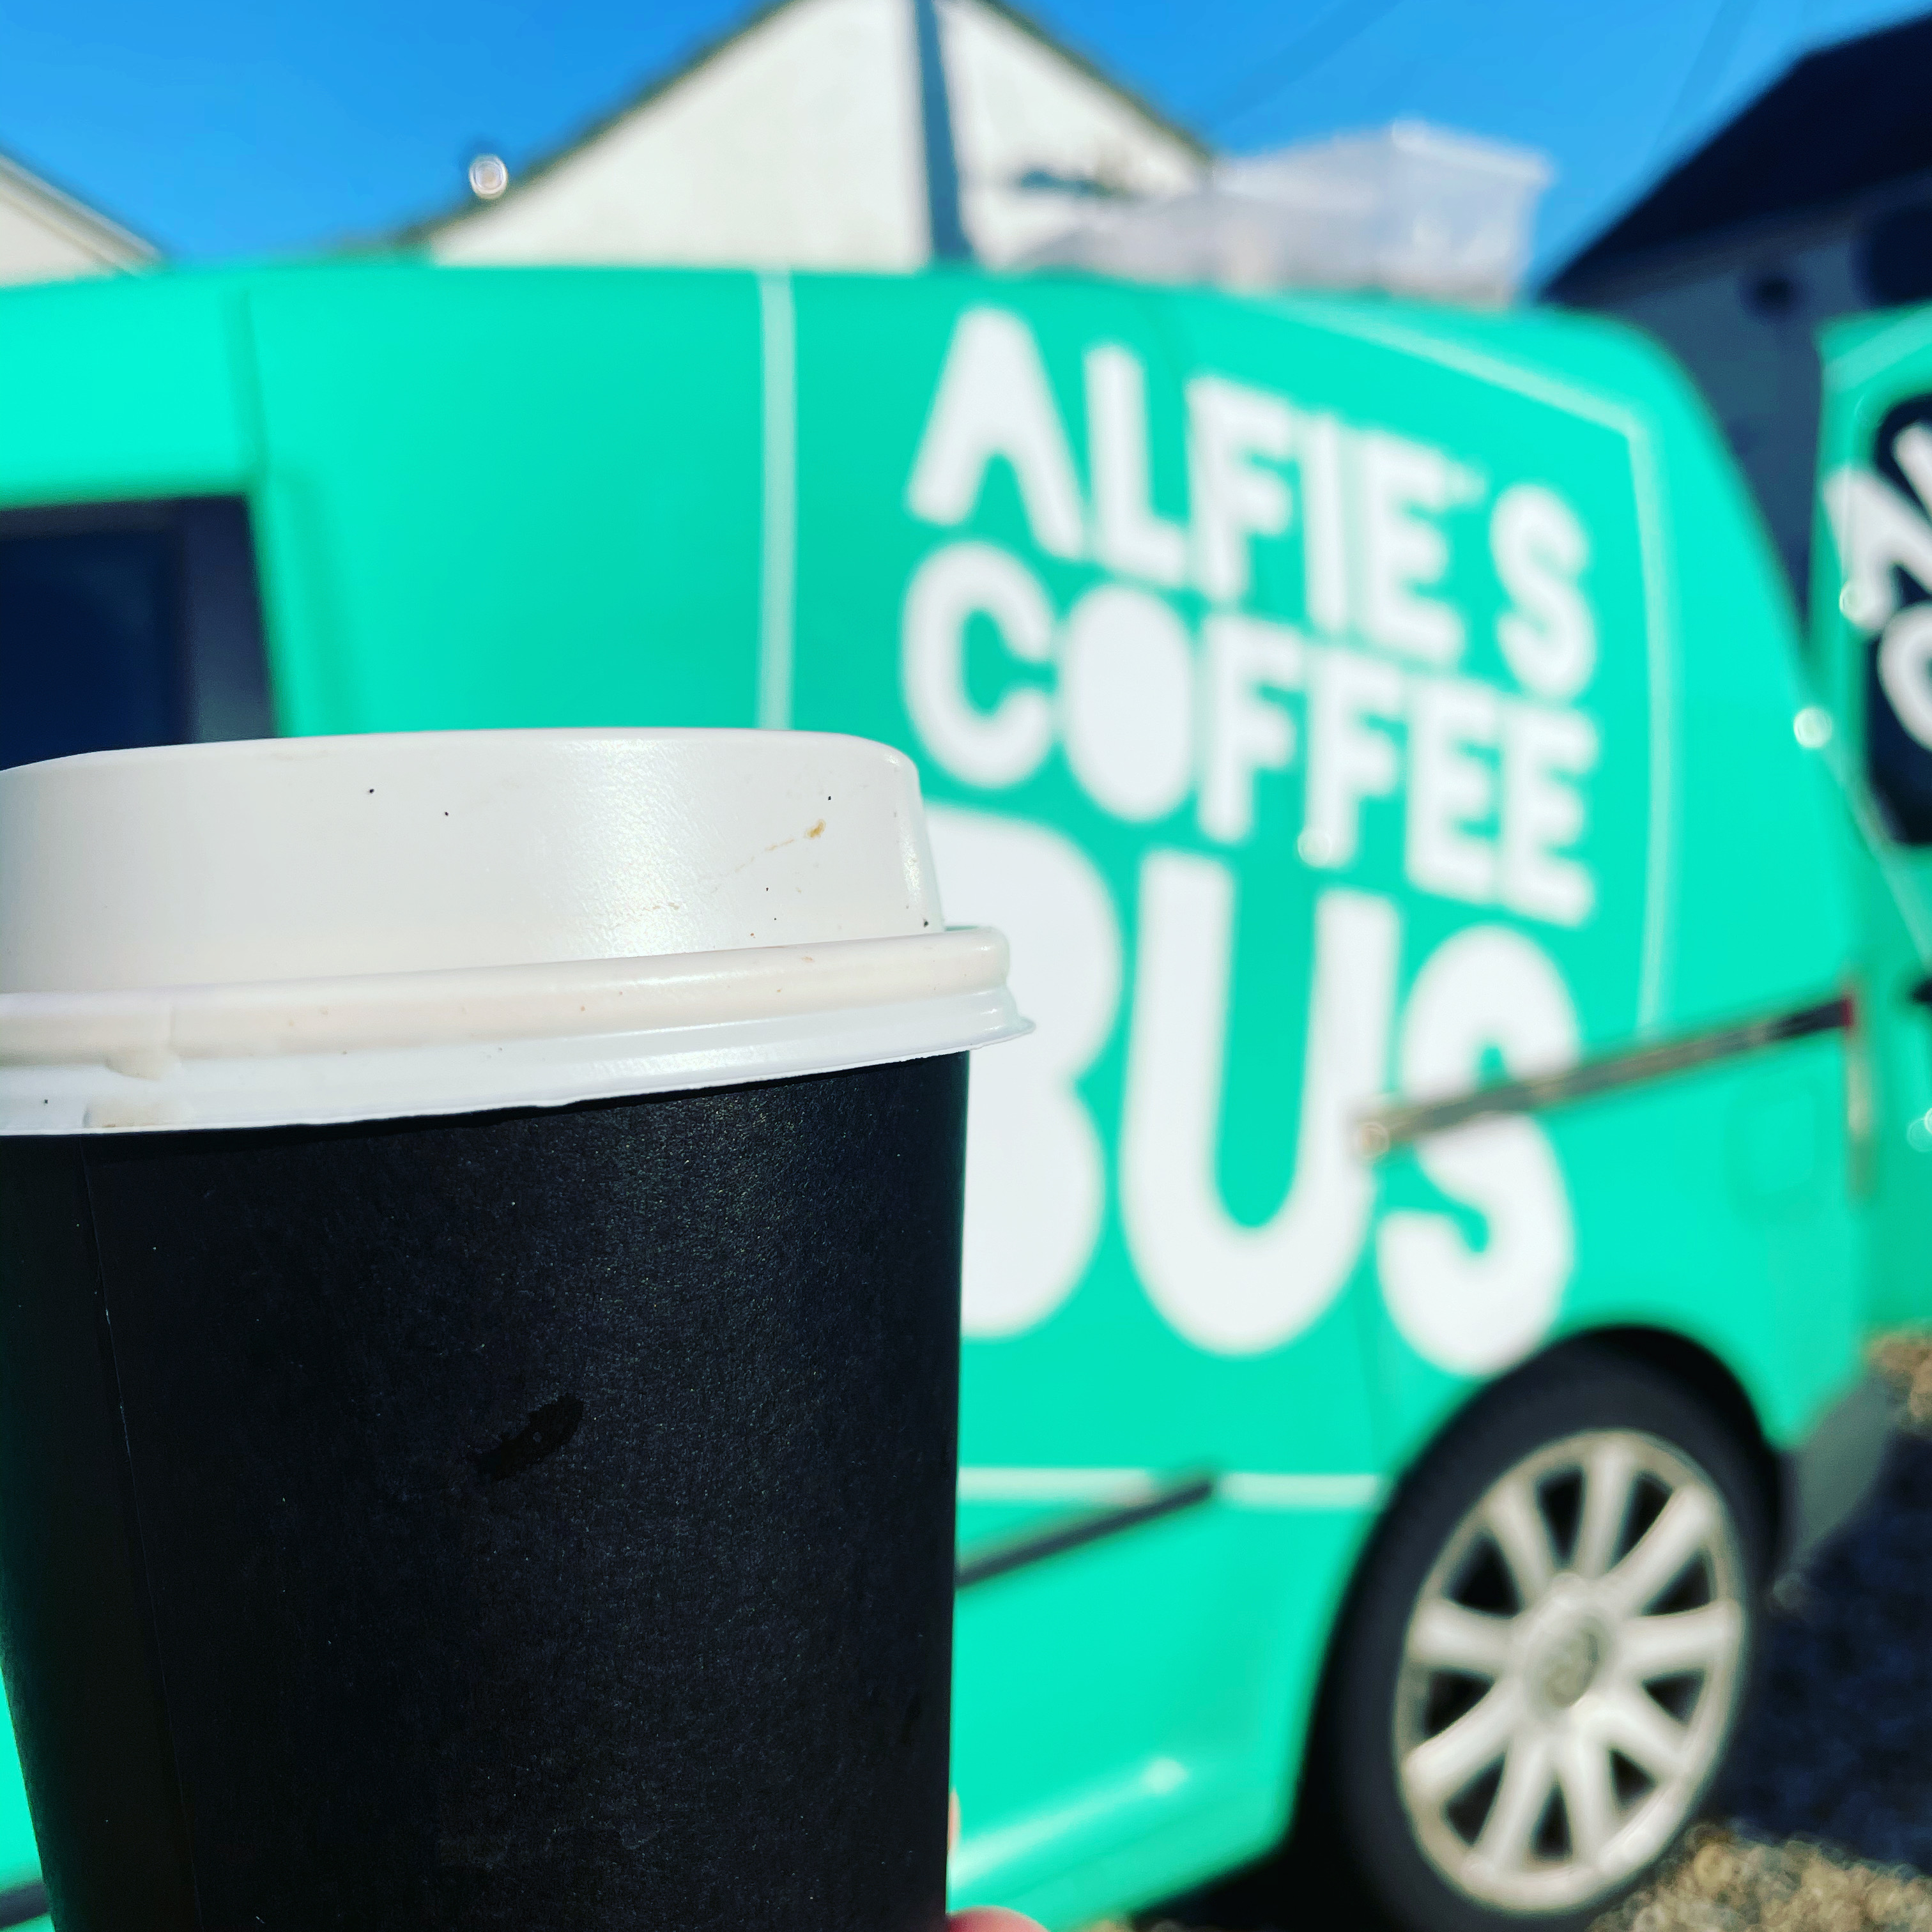 Alfie’s Coffee Bus